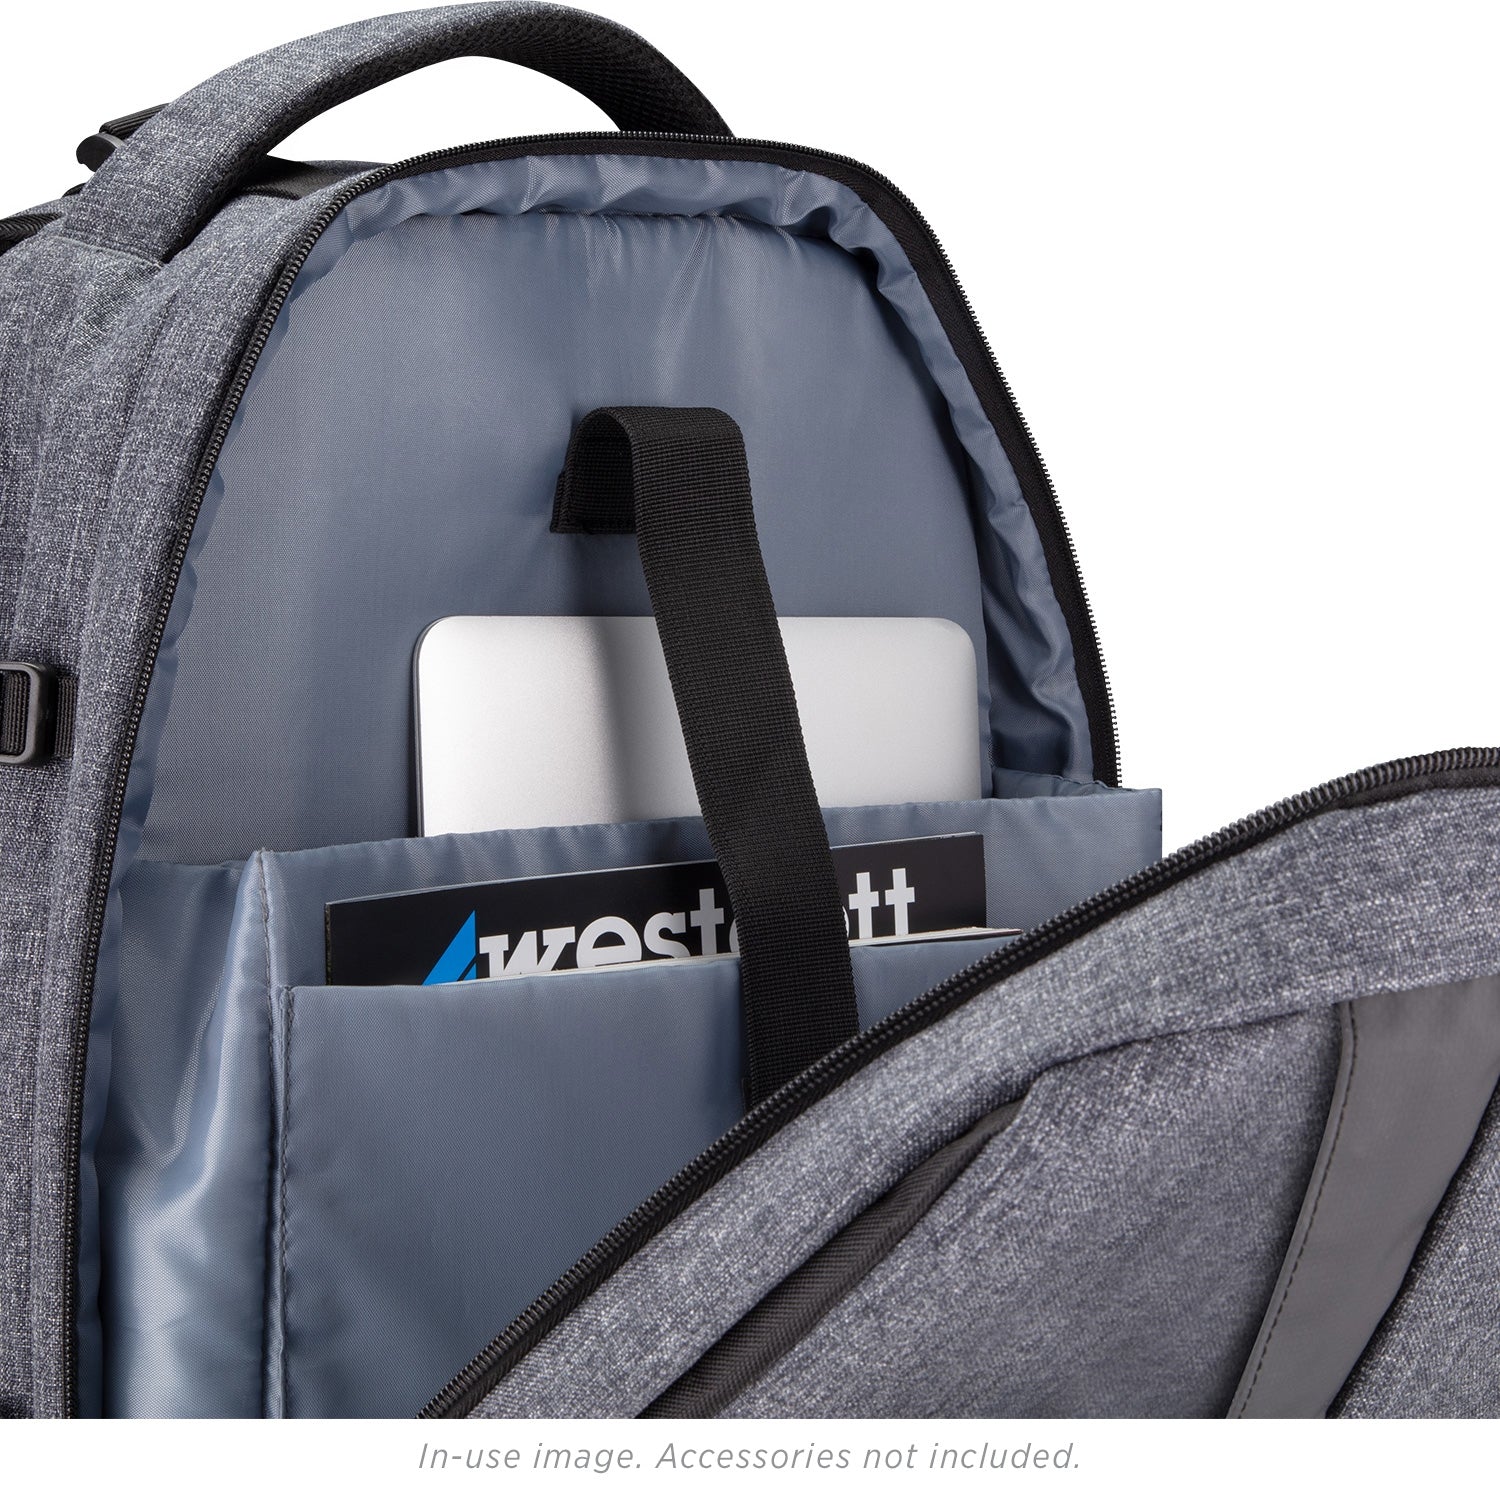 FJ200 Strobe 3-Light Backpack Kit with FJ-X3 S Wireless Trigger for So